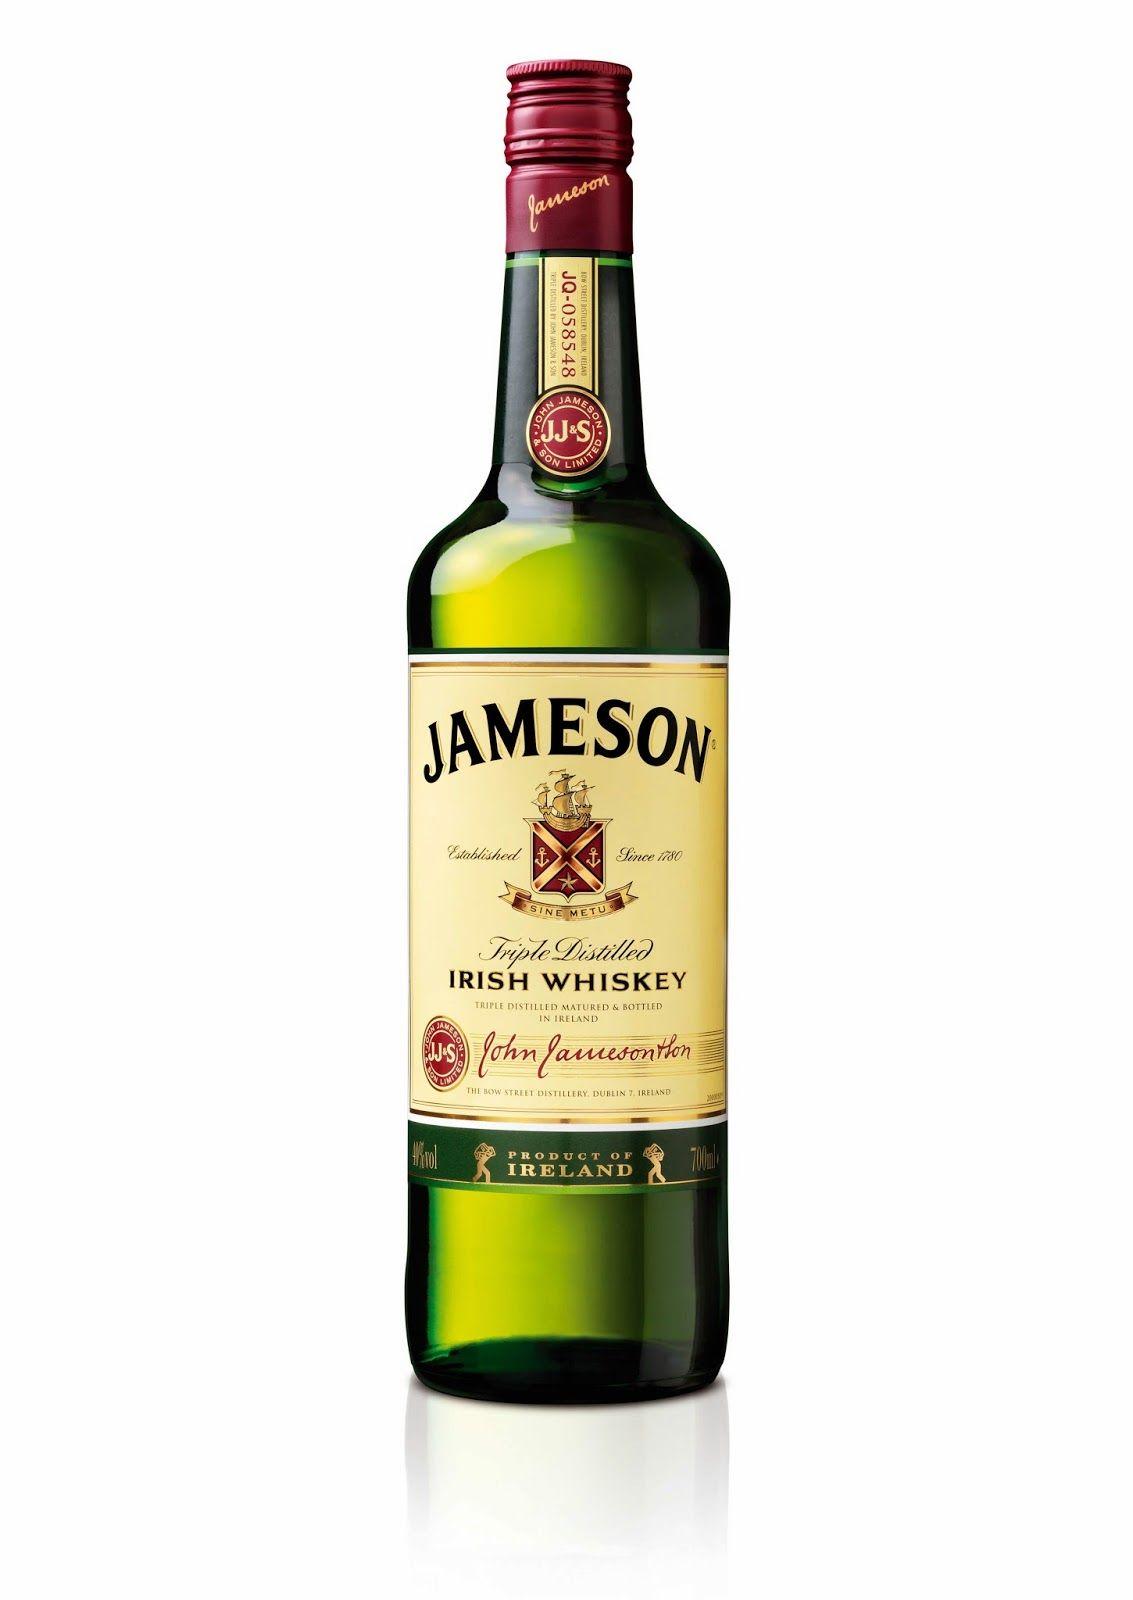 Jameson Whiskey Logo - Jameson's Irish Whiskey | Packaging Design